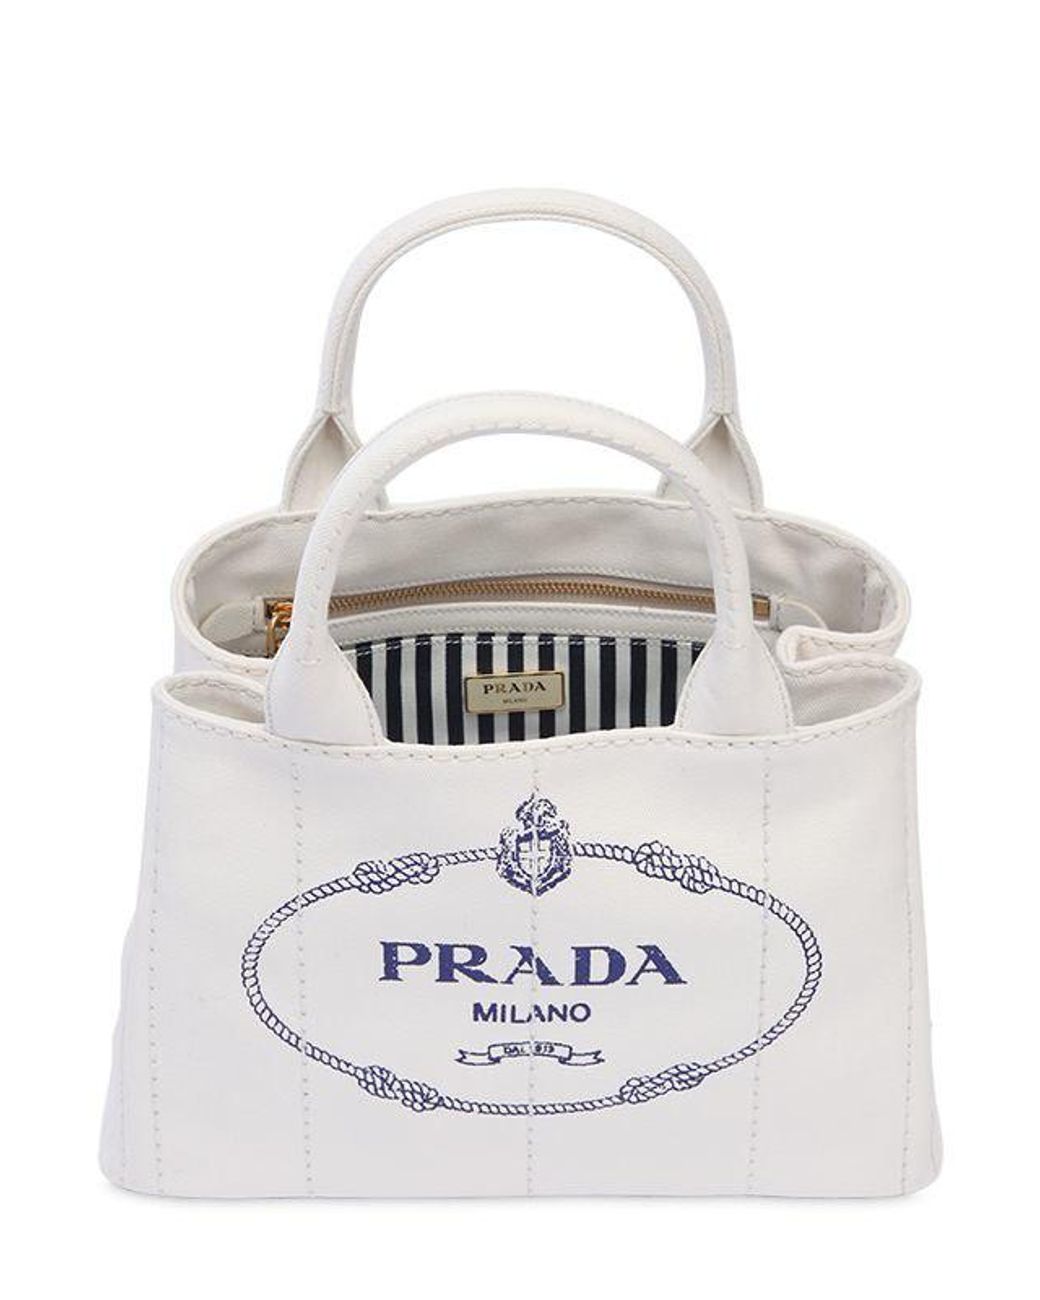 Prada Small Gardener's Cotton Canvas Bag in White | Lyst